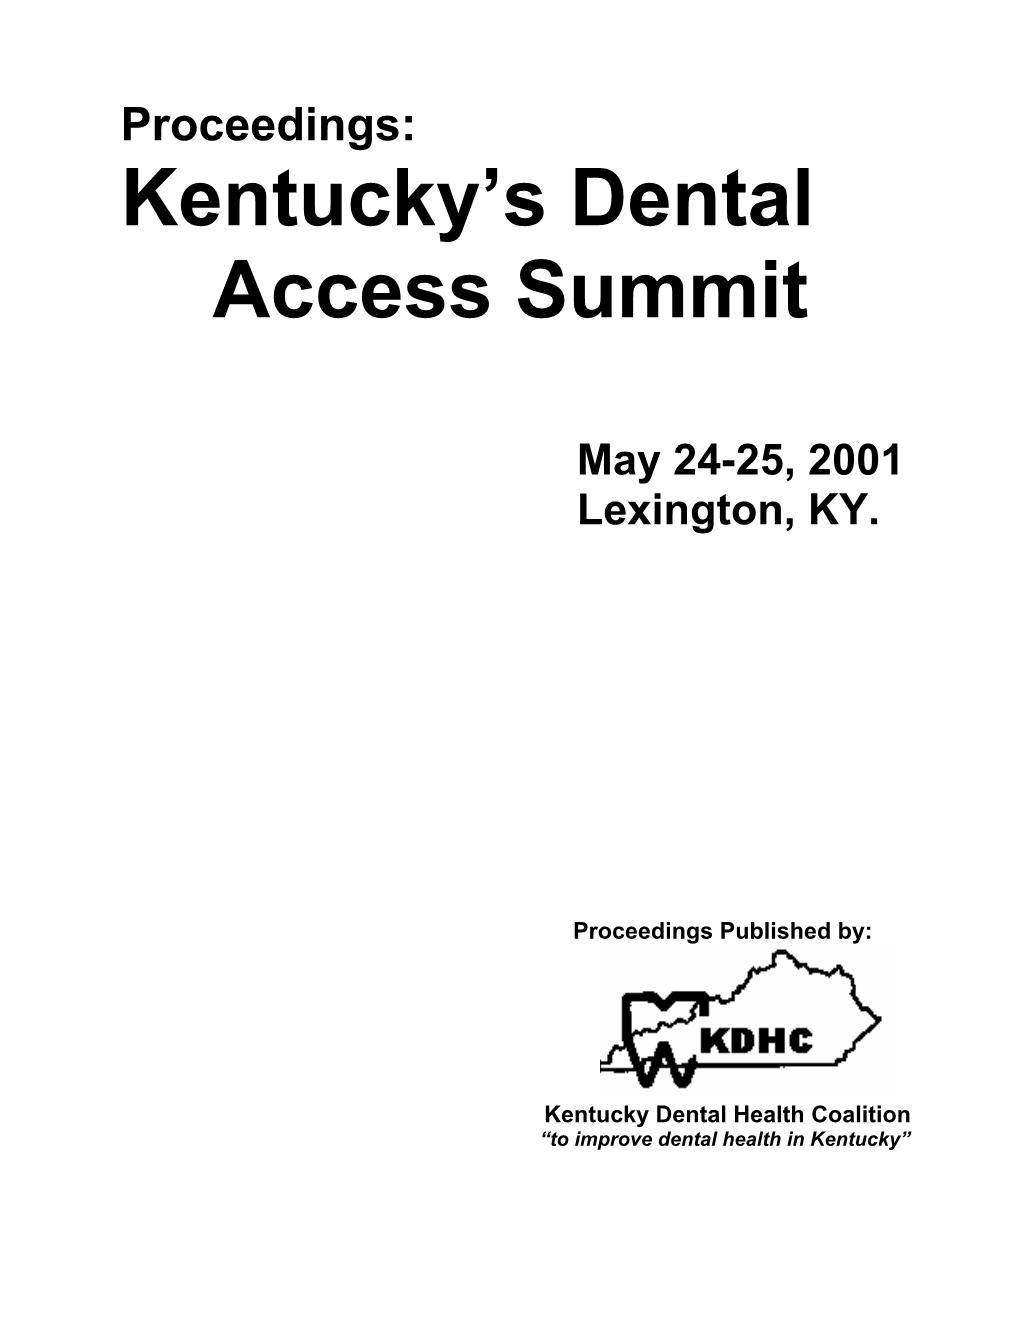 Kentucky Holds First Ever Dental Access Summit